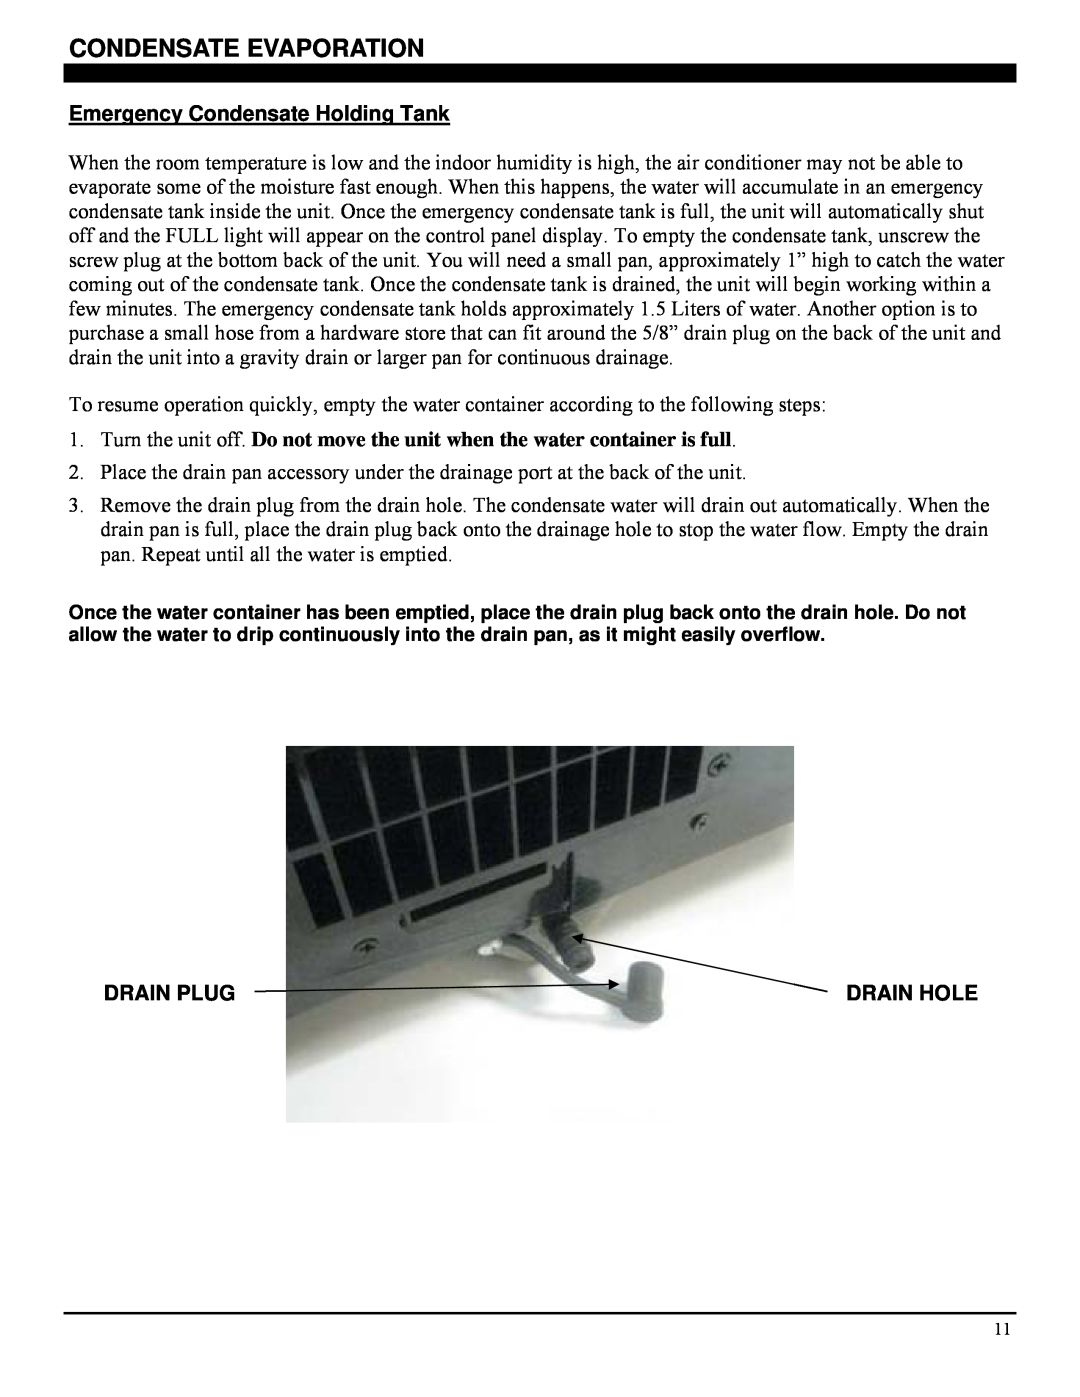 Soleus Air PE7-10R-03 Condensate Evaporation, Emergency Condensate Holding Tank, Drain Plug Drain Hole 